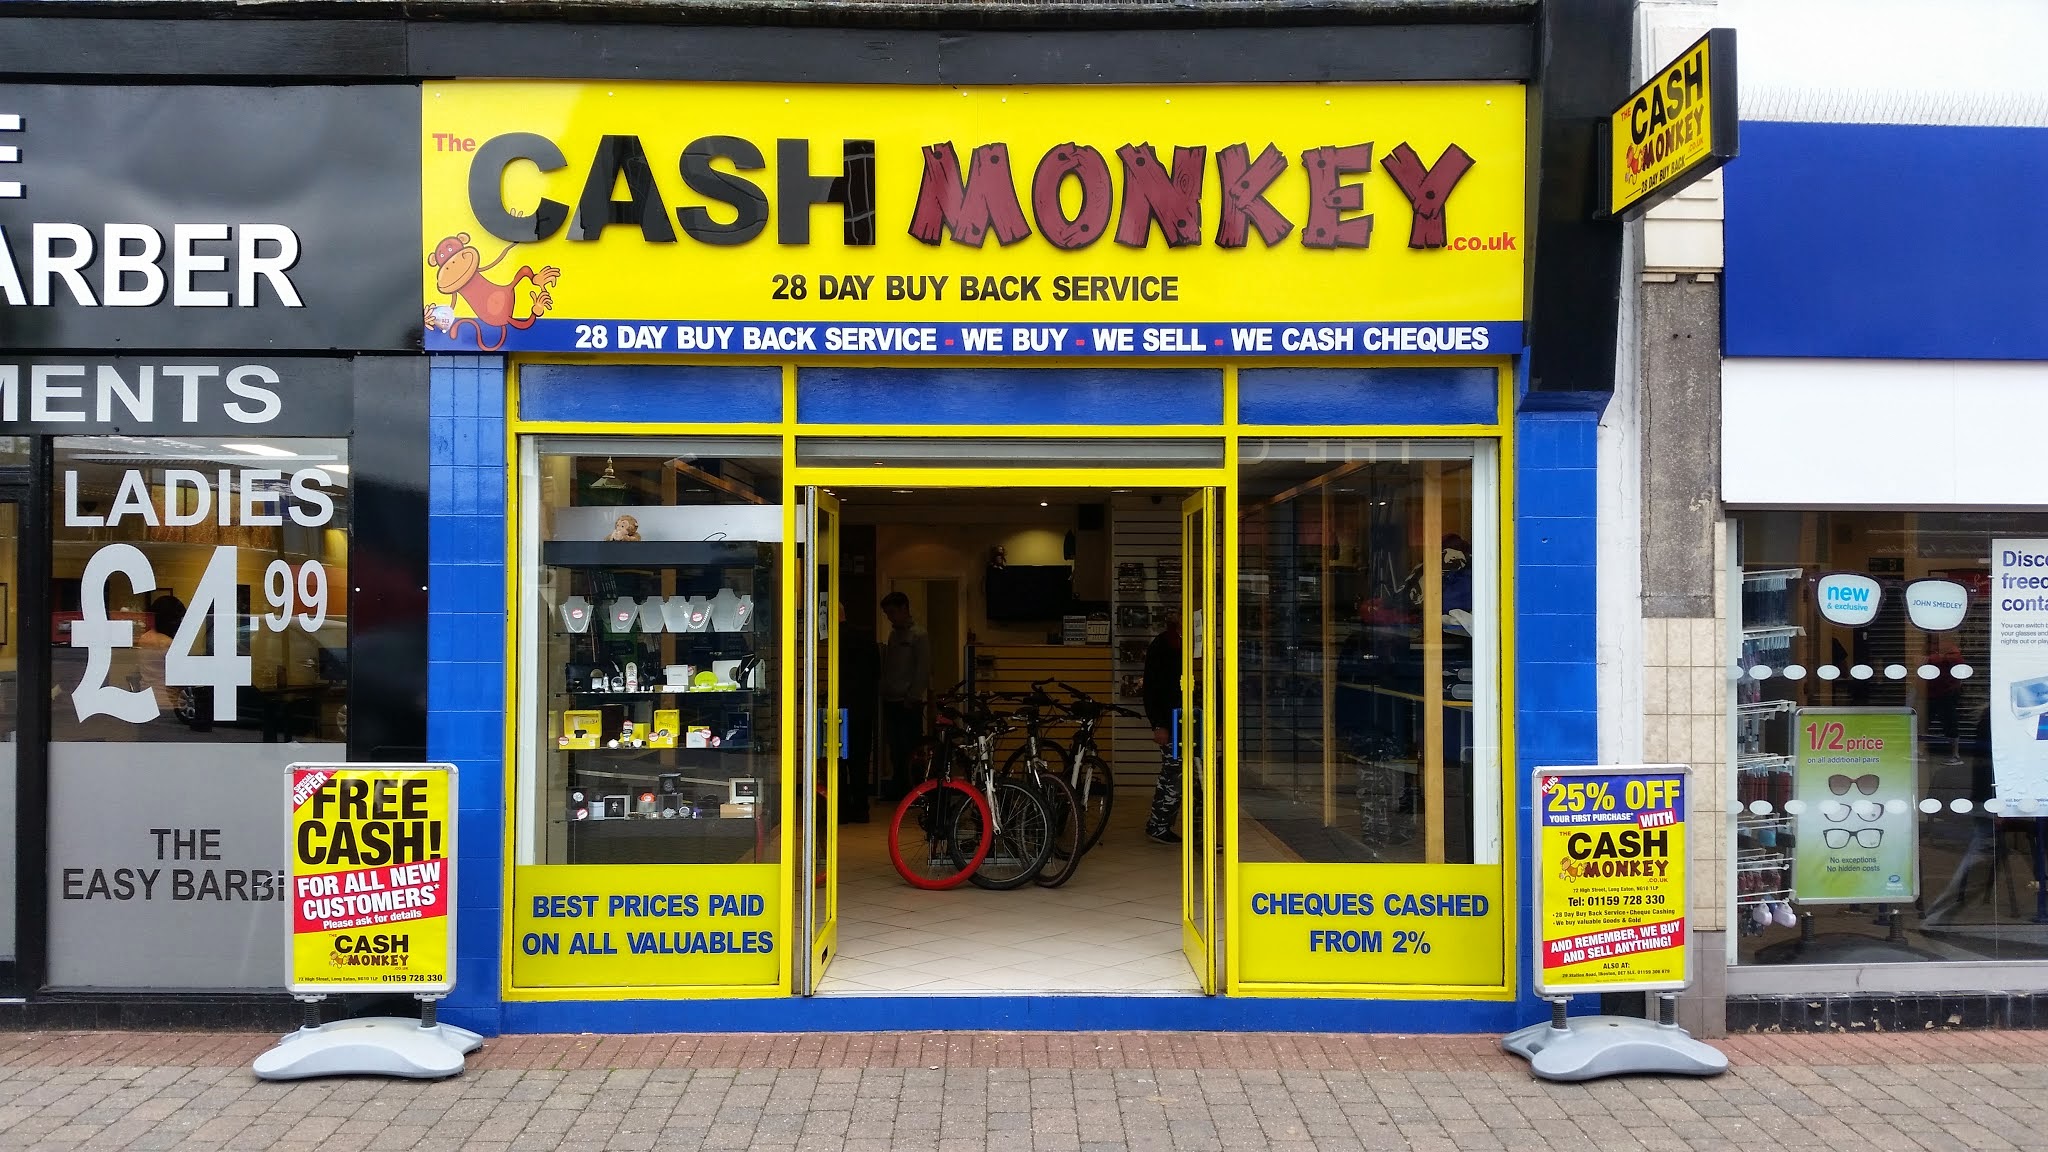 Cash Monkey Long Eaton